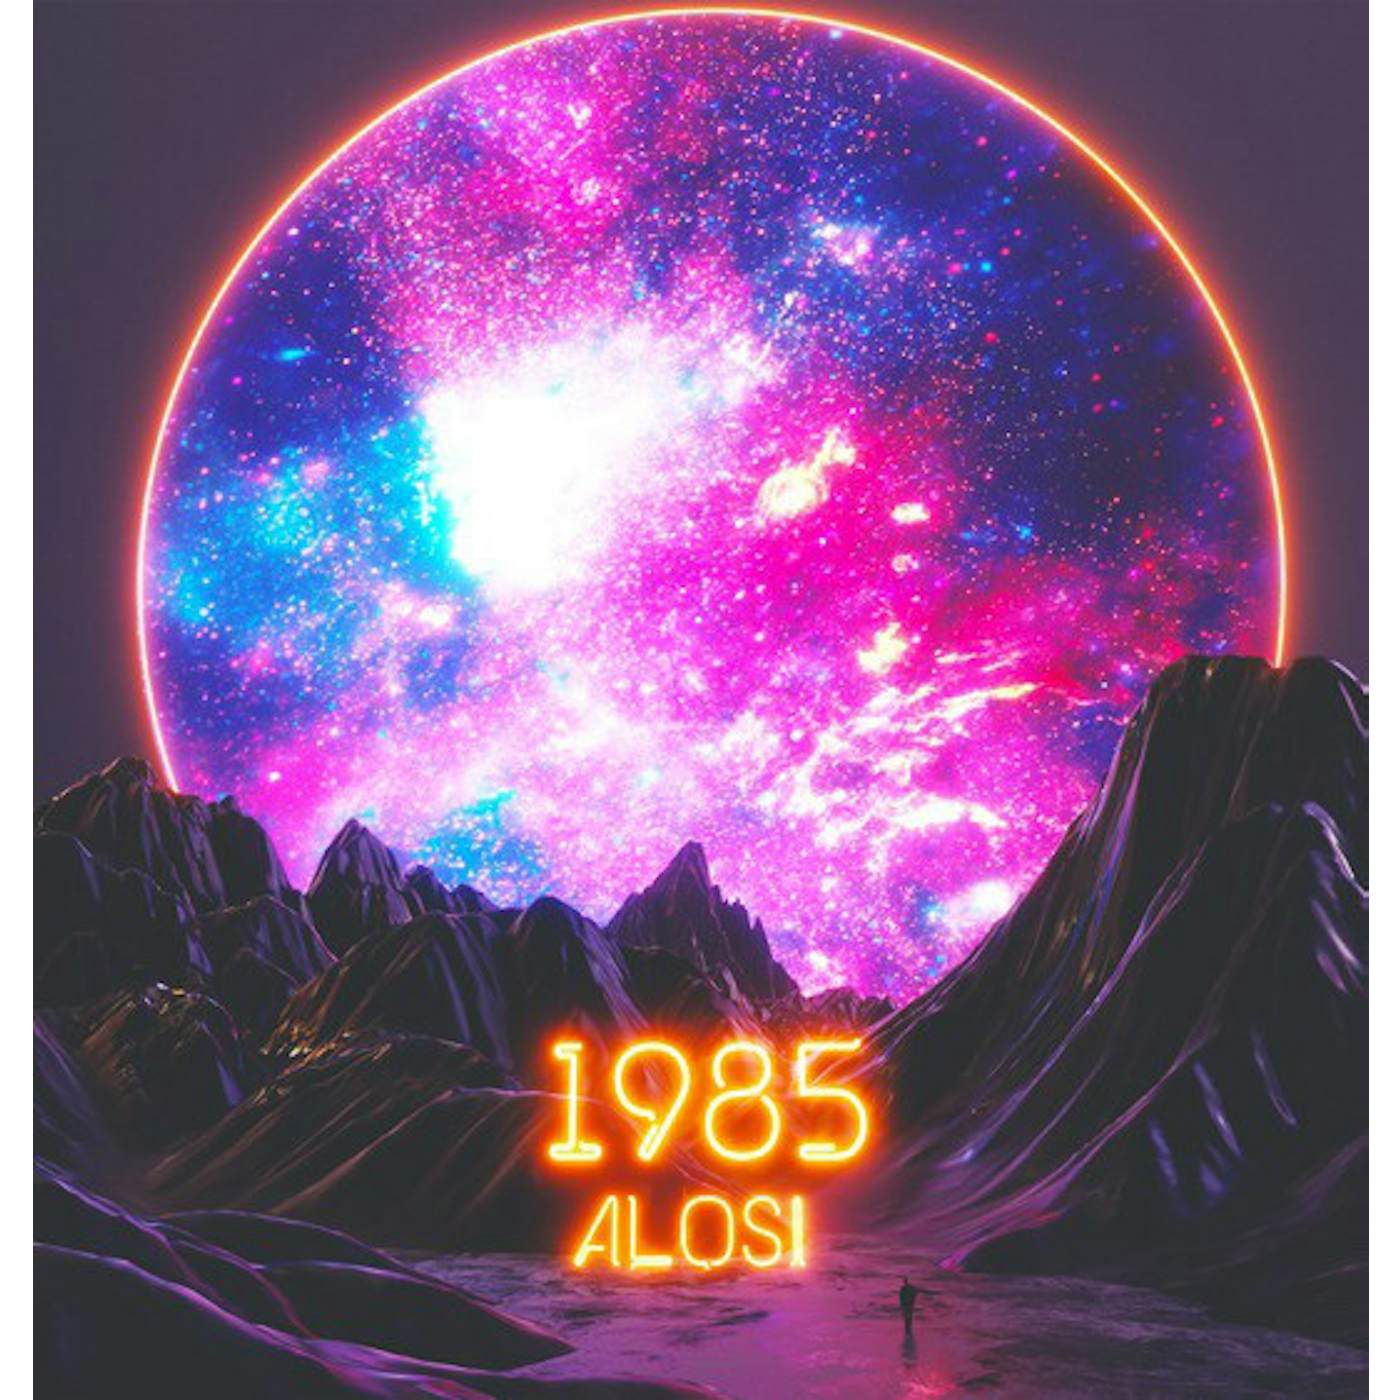 Aloisi 1985 Vinyl Record